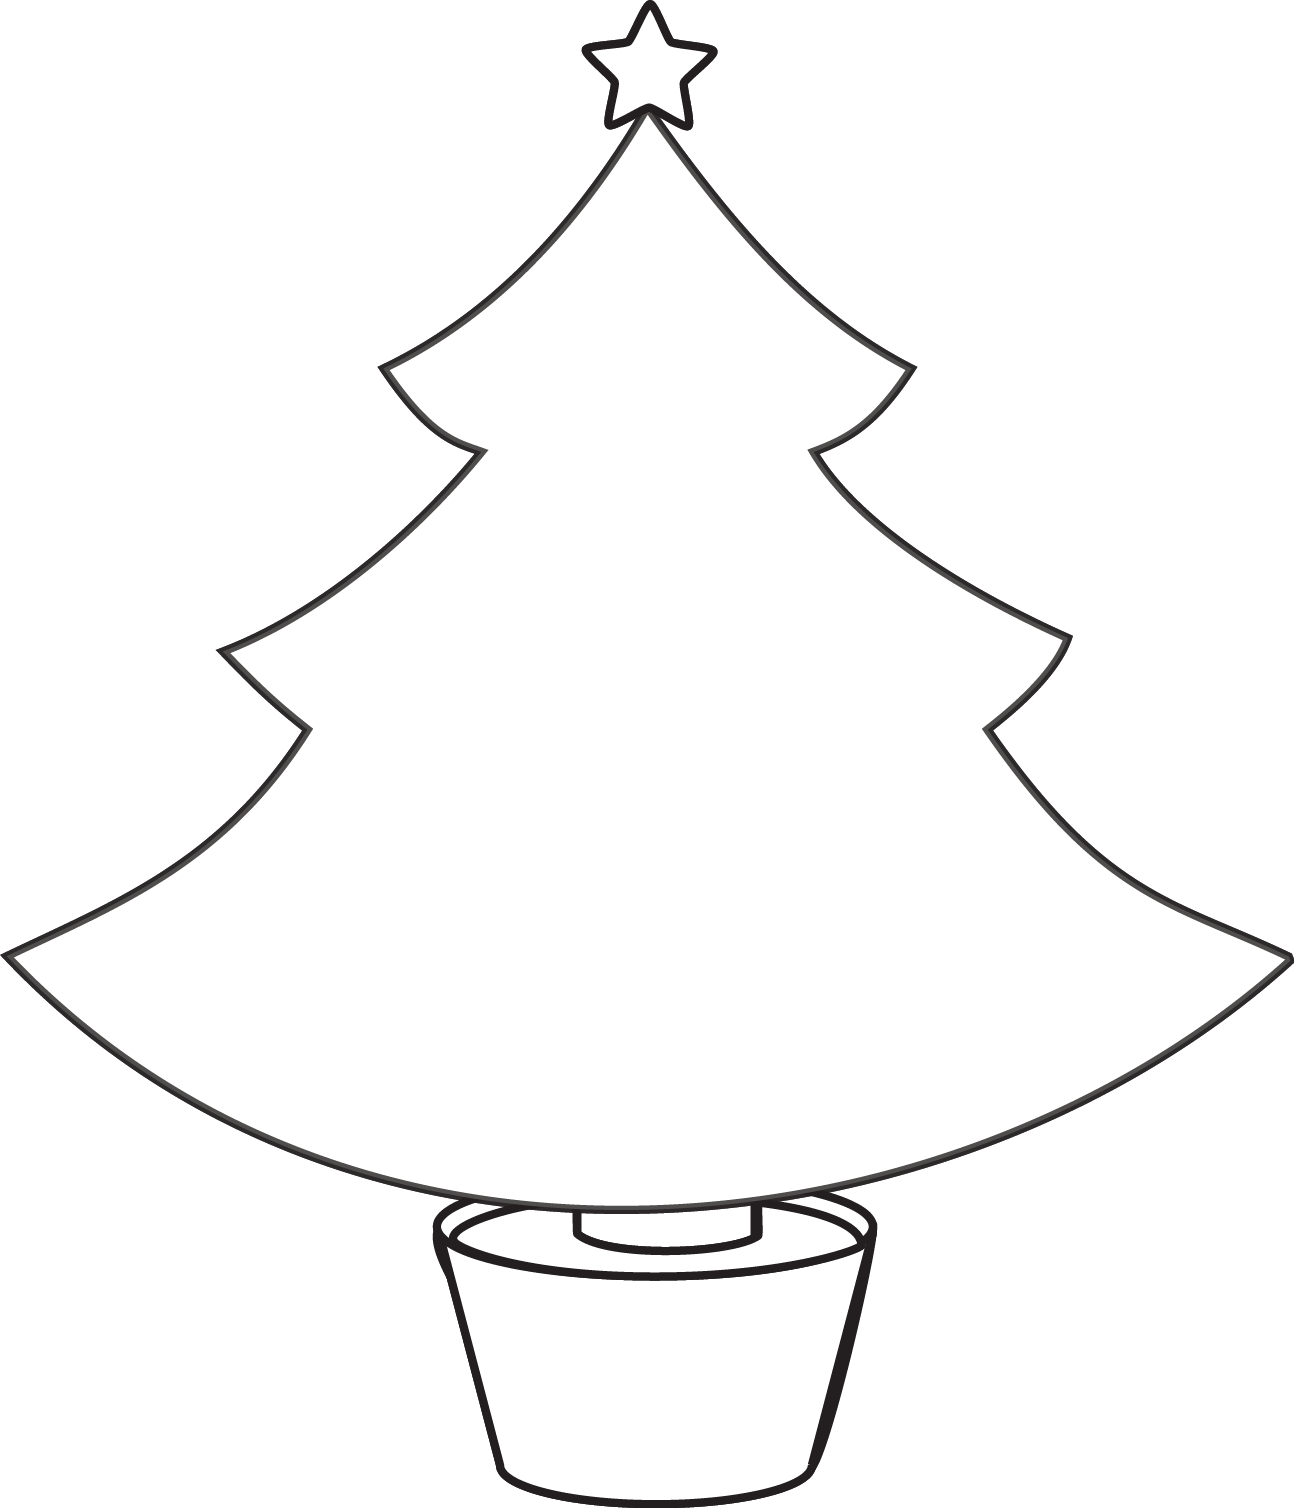 Clip Art Christmas Tree Outline Clipart Christmas Tree Outline